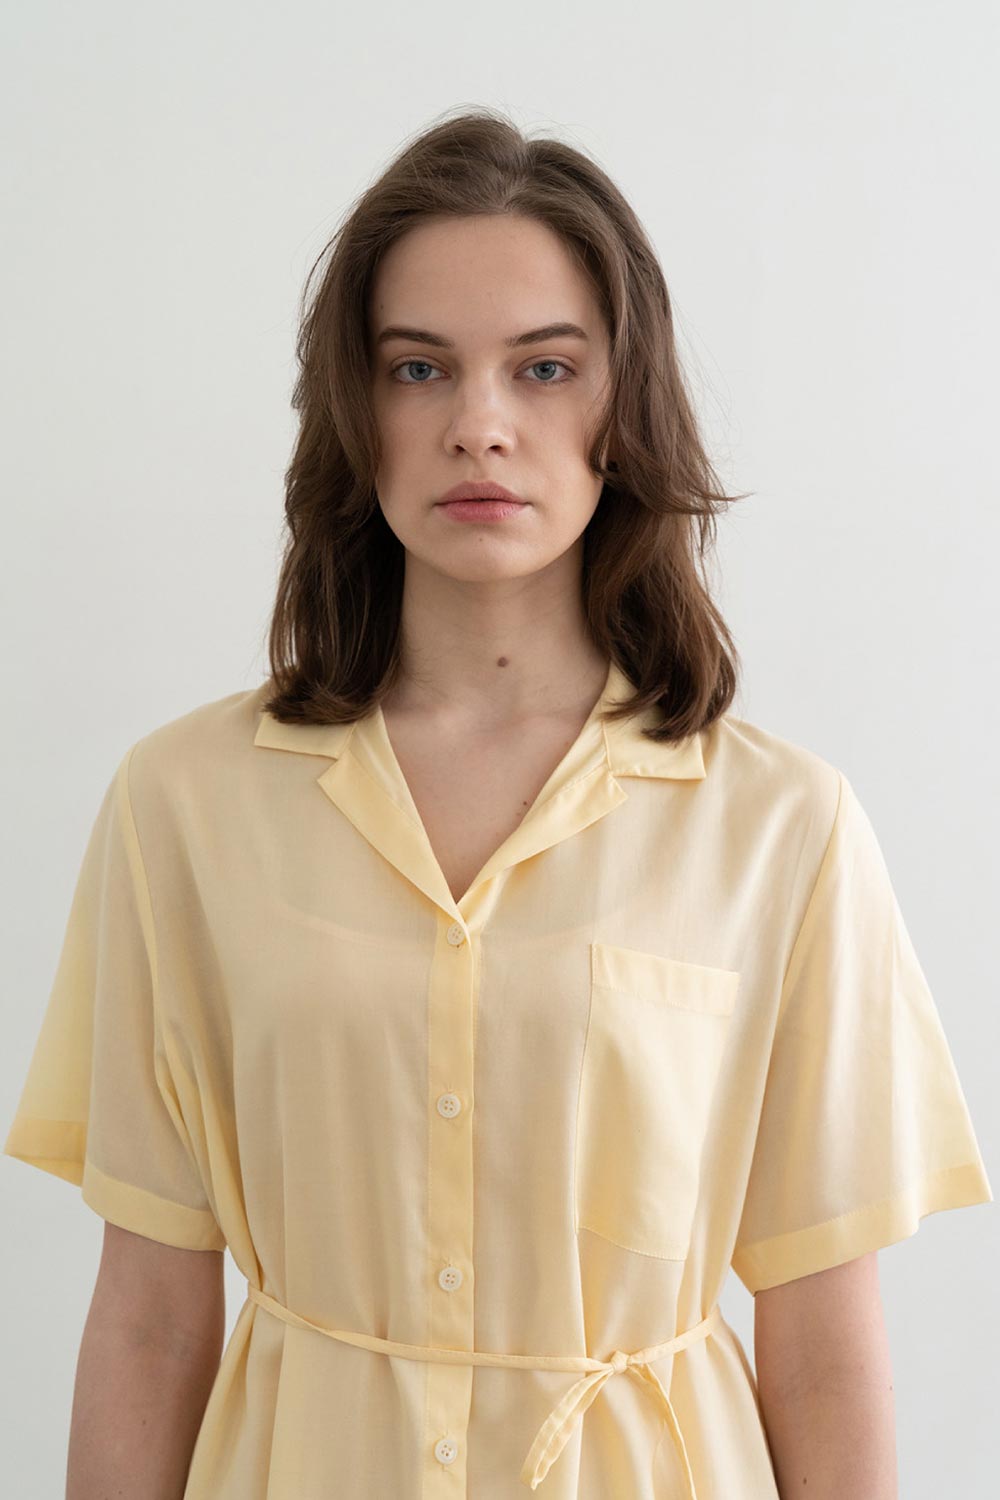 Sheer String Shirt Dress Yellow